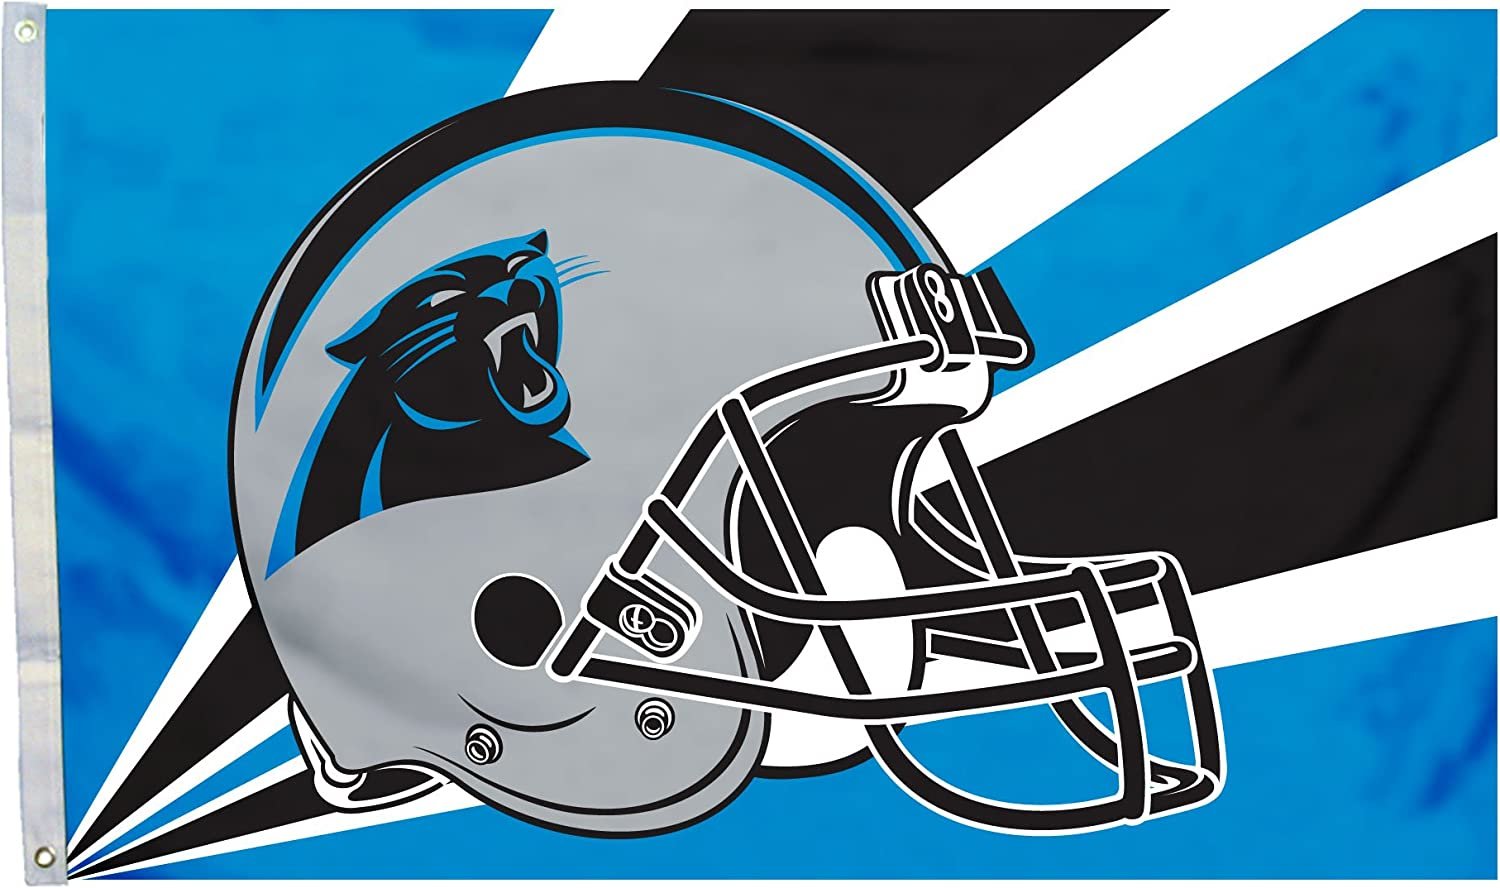 Carolina Panthers 3x5 Foot Flag Banner, Metal Grommets. Outdoor, Single Sided, Helmet Design